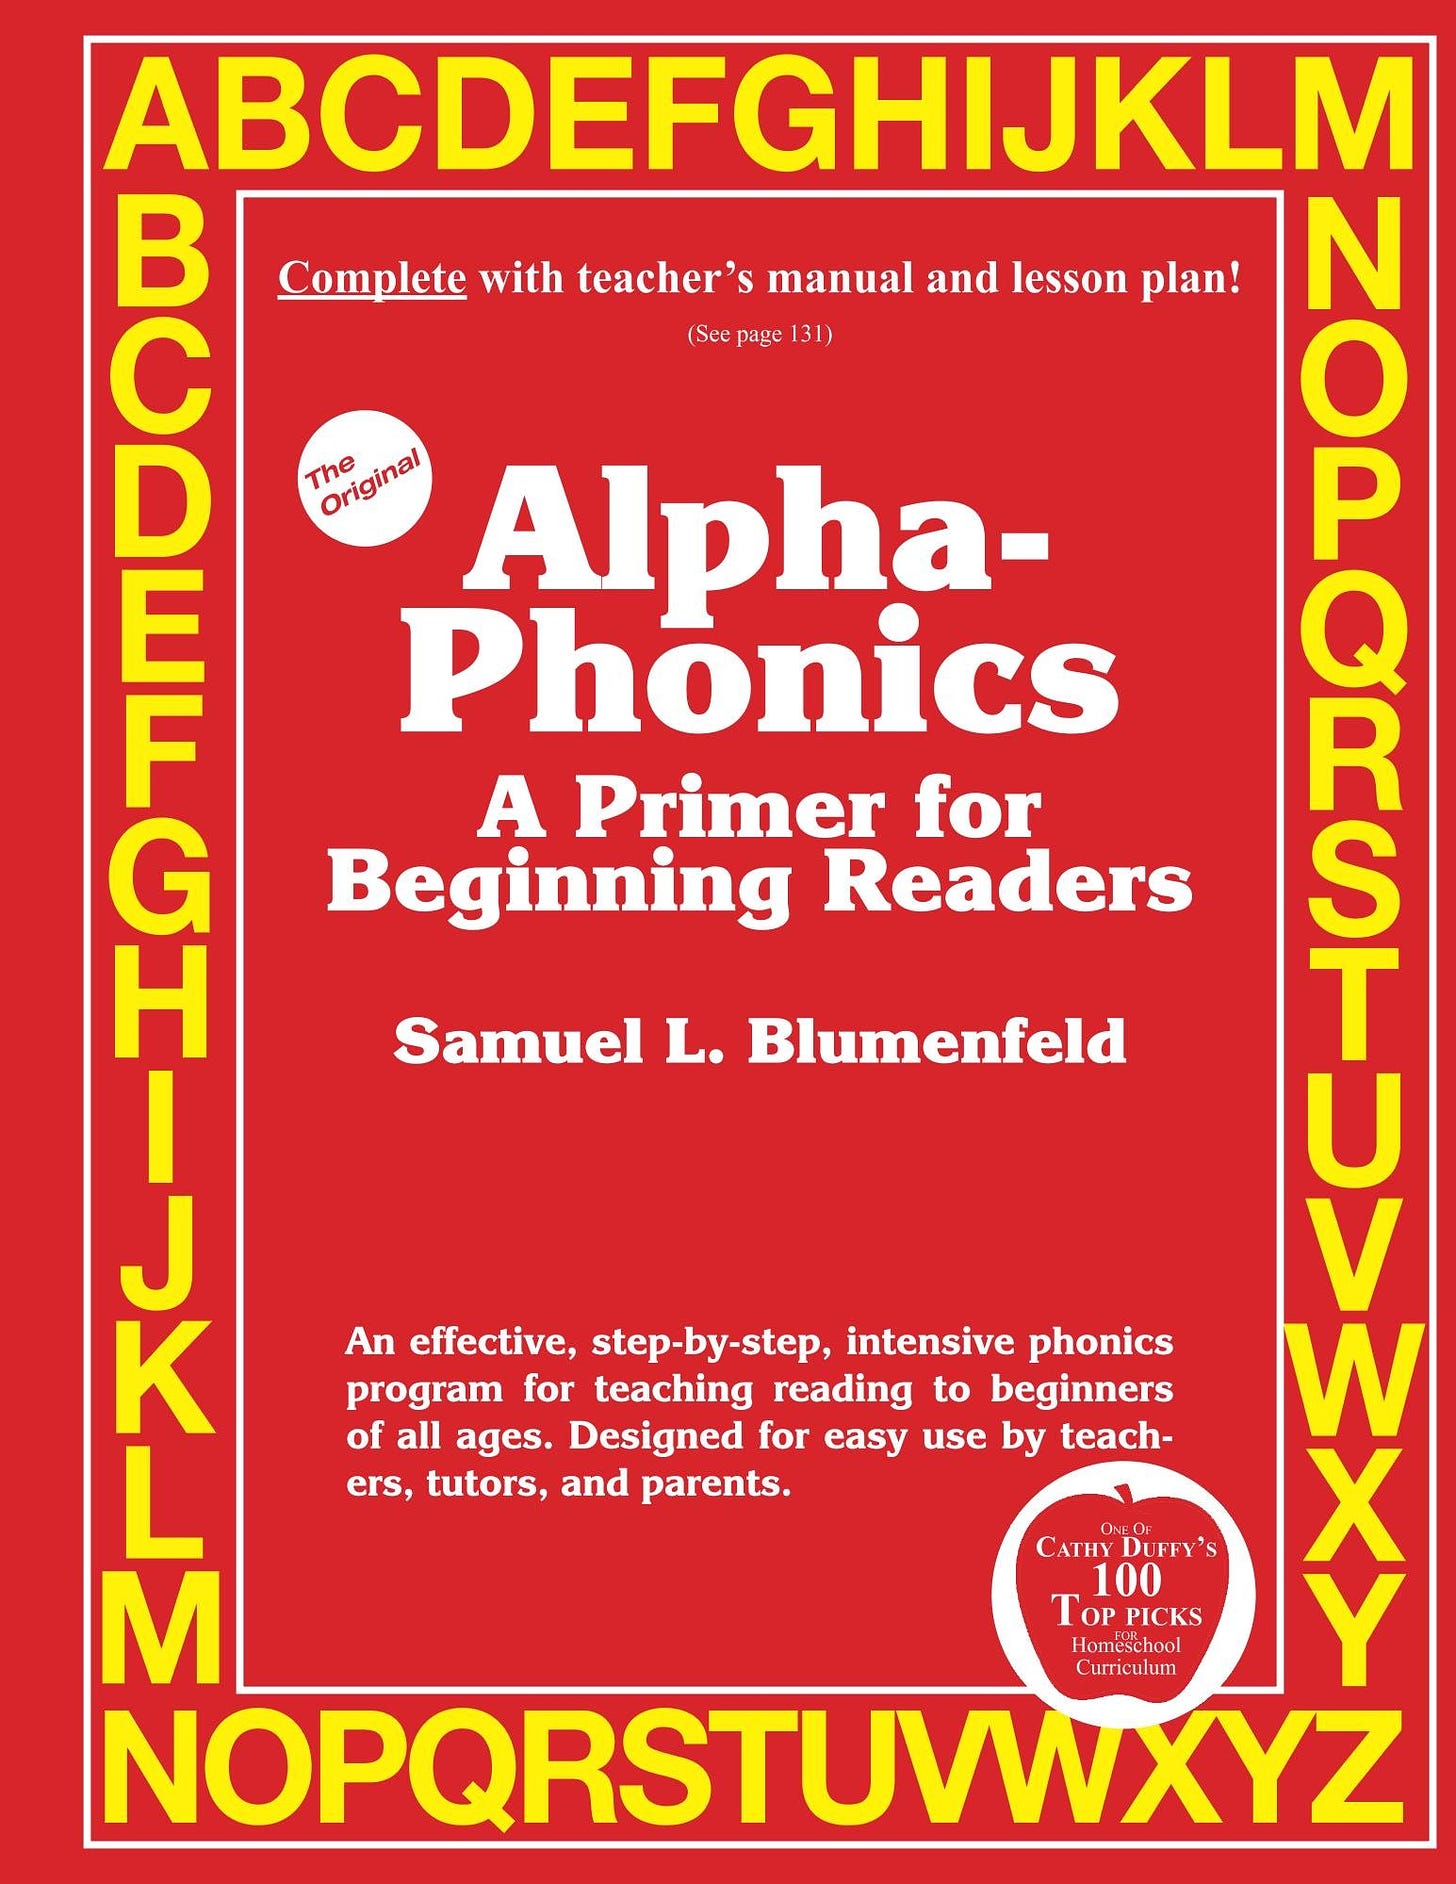 Alpha Phonics: Amazon.co.uk: Blumenfeld, Samuel L.: 9780941995009: Books